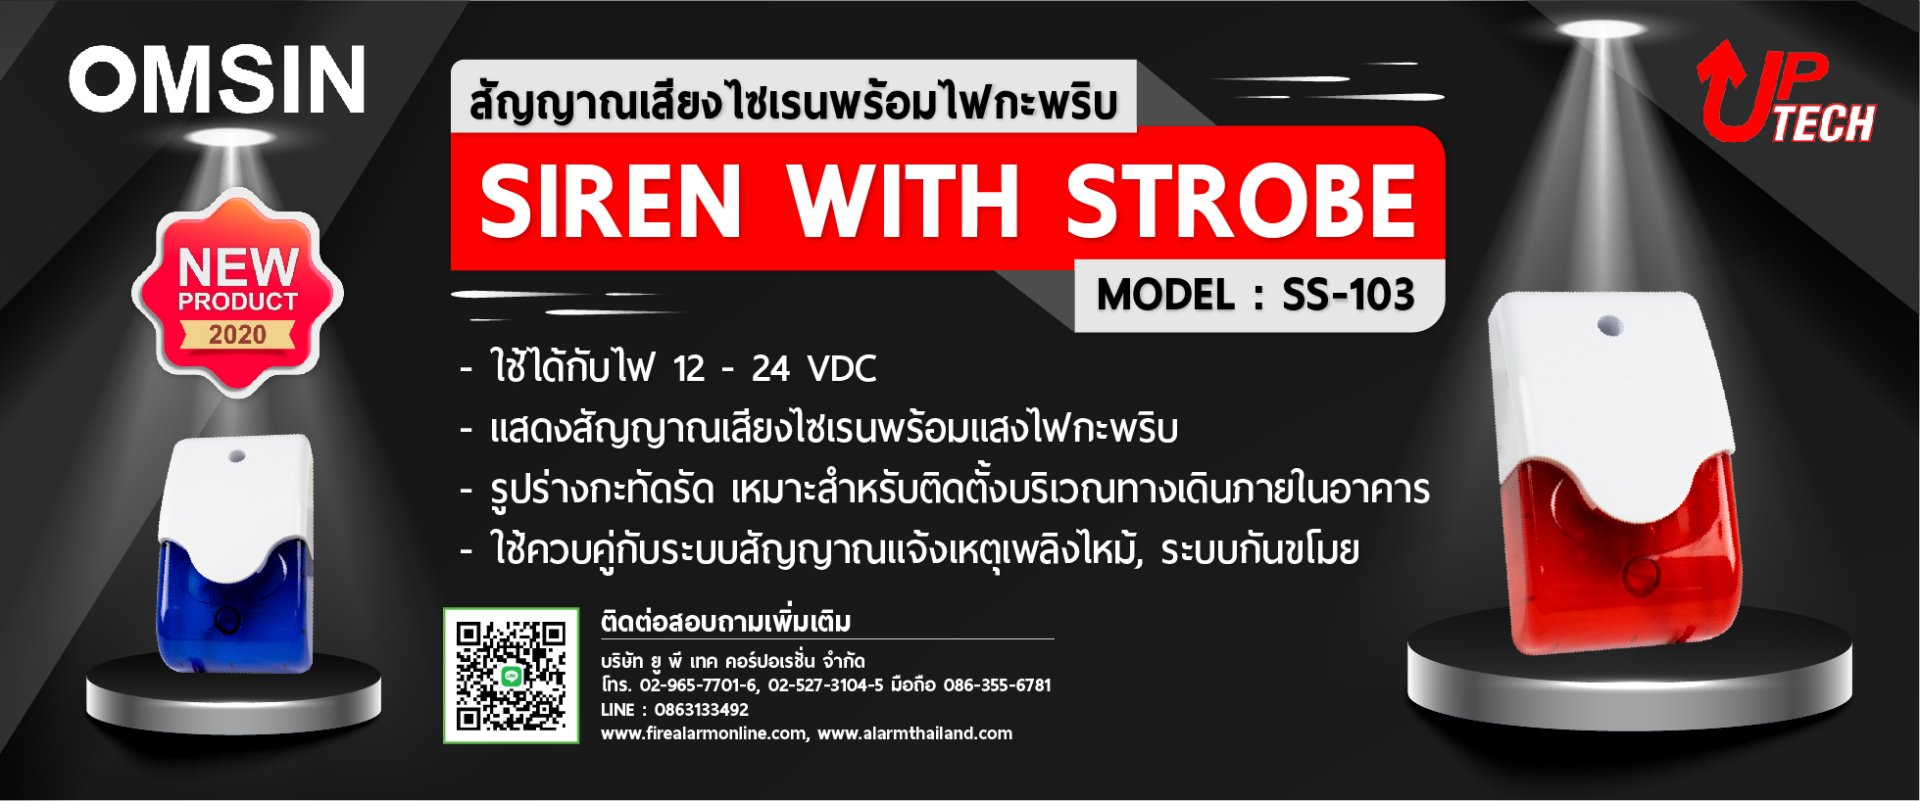 SS-103 Siren With Strobe (สัญญาณเสียงไซเรนพร้อมไฟกะพริบ) ยี่ห้อ OMSIN 